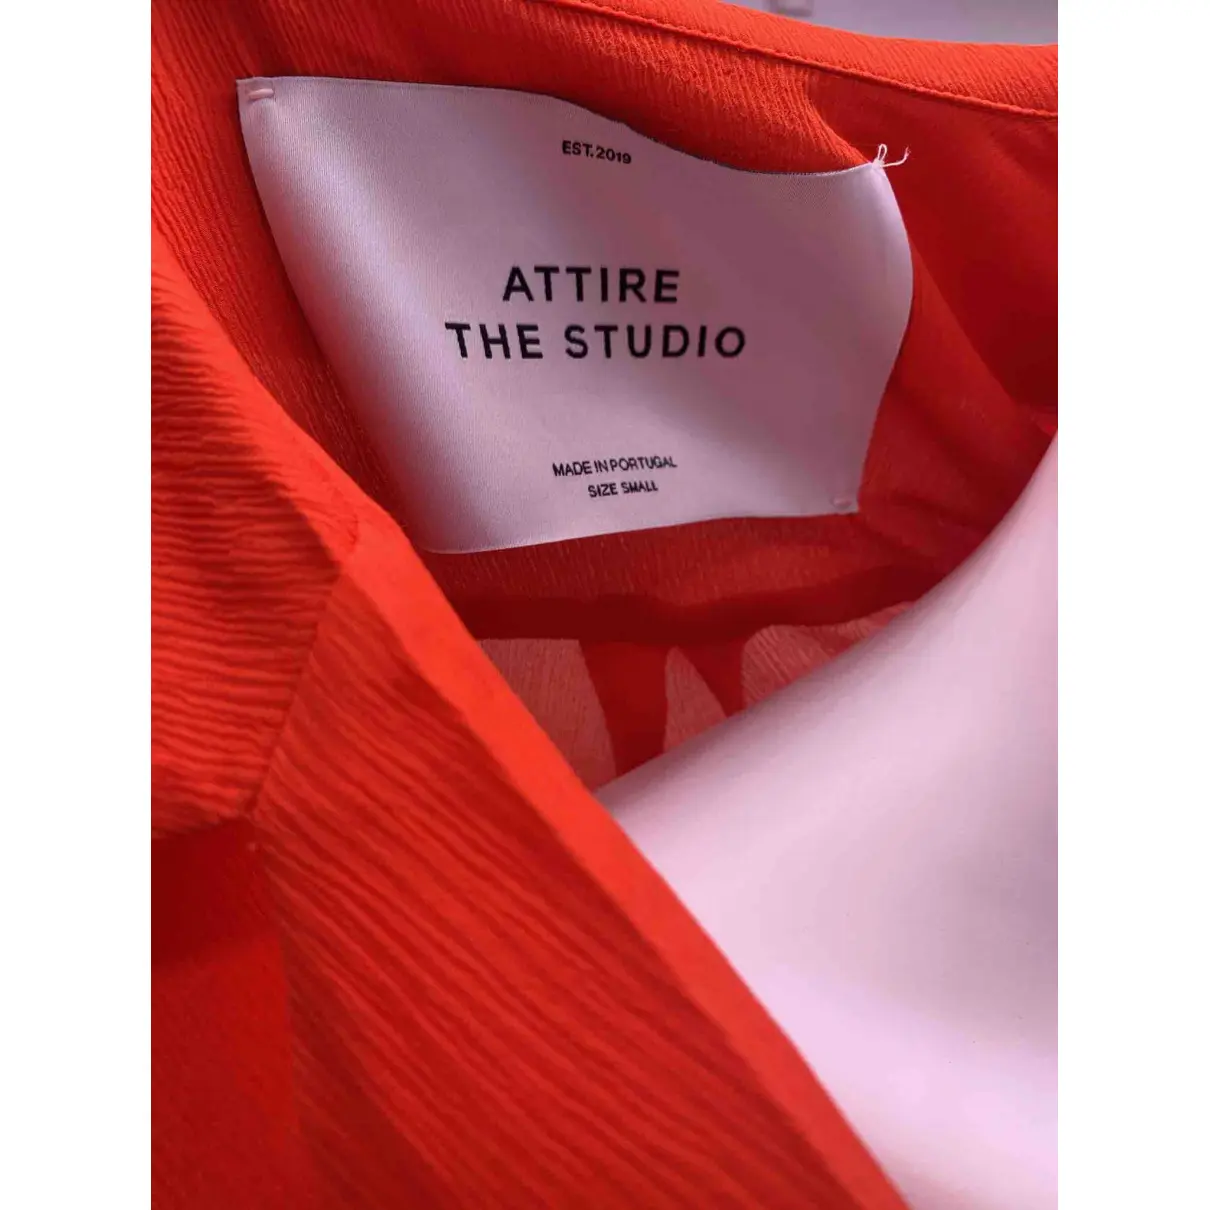 Silk shirt Attire the studio